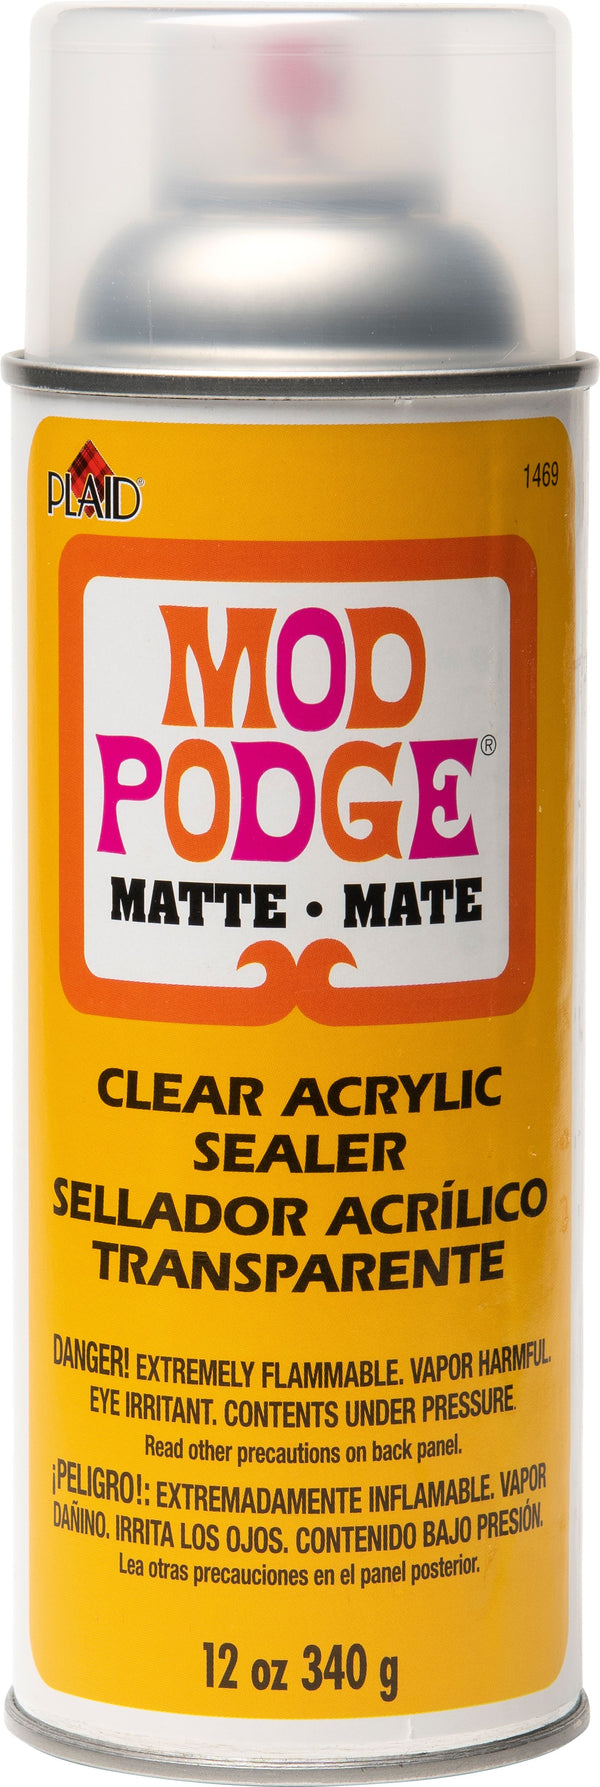 Mod Podge Acrylic Sealer Matte 12oz/340g